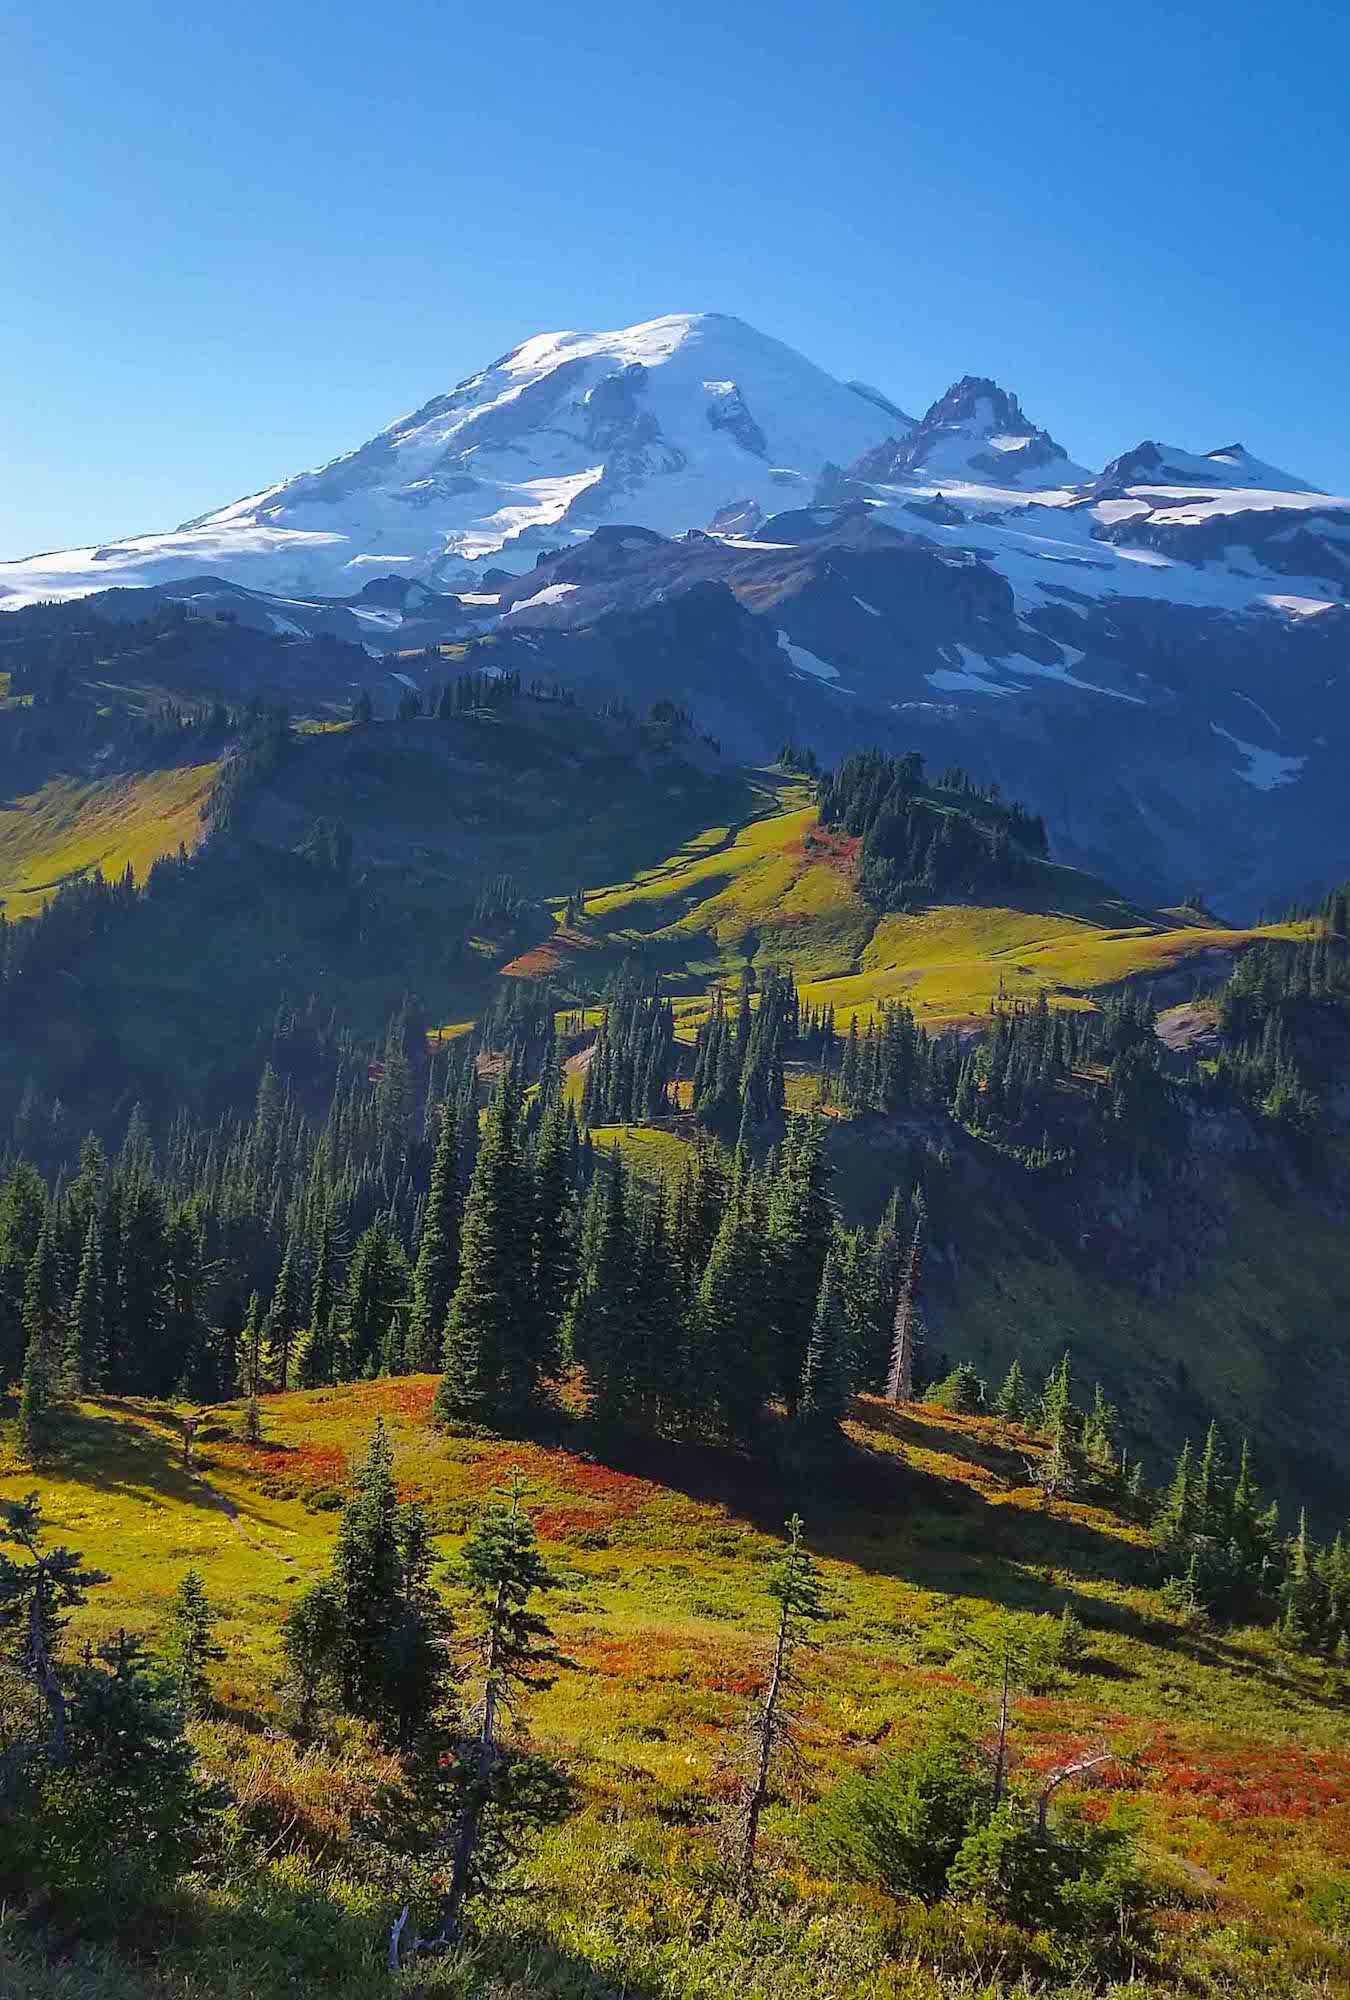 Mt Rainier in the Washington Cascades.  Photo by Brock Dallman